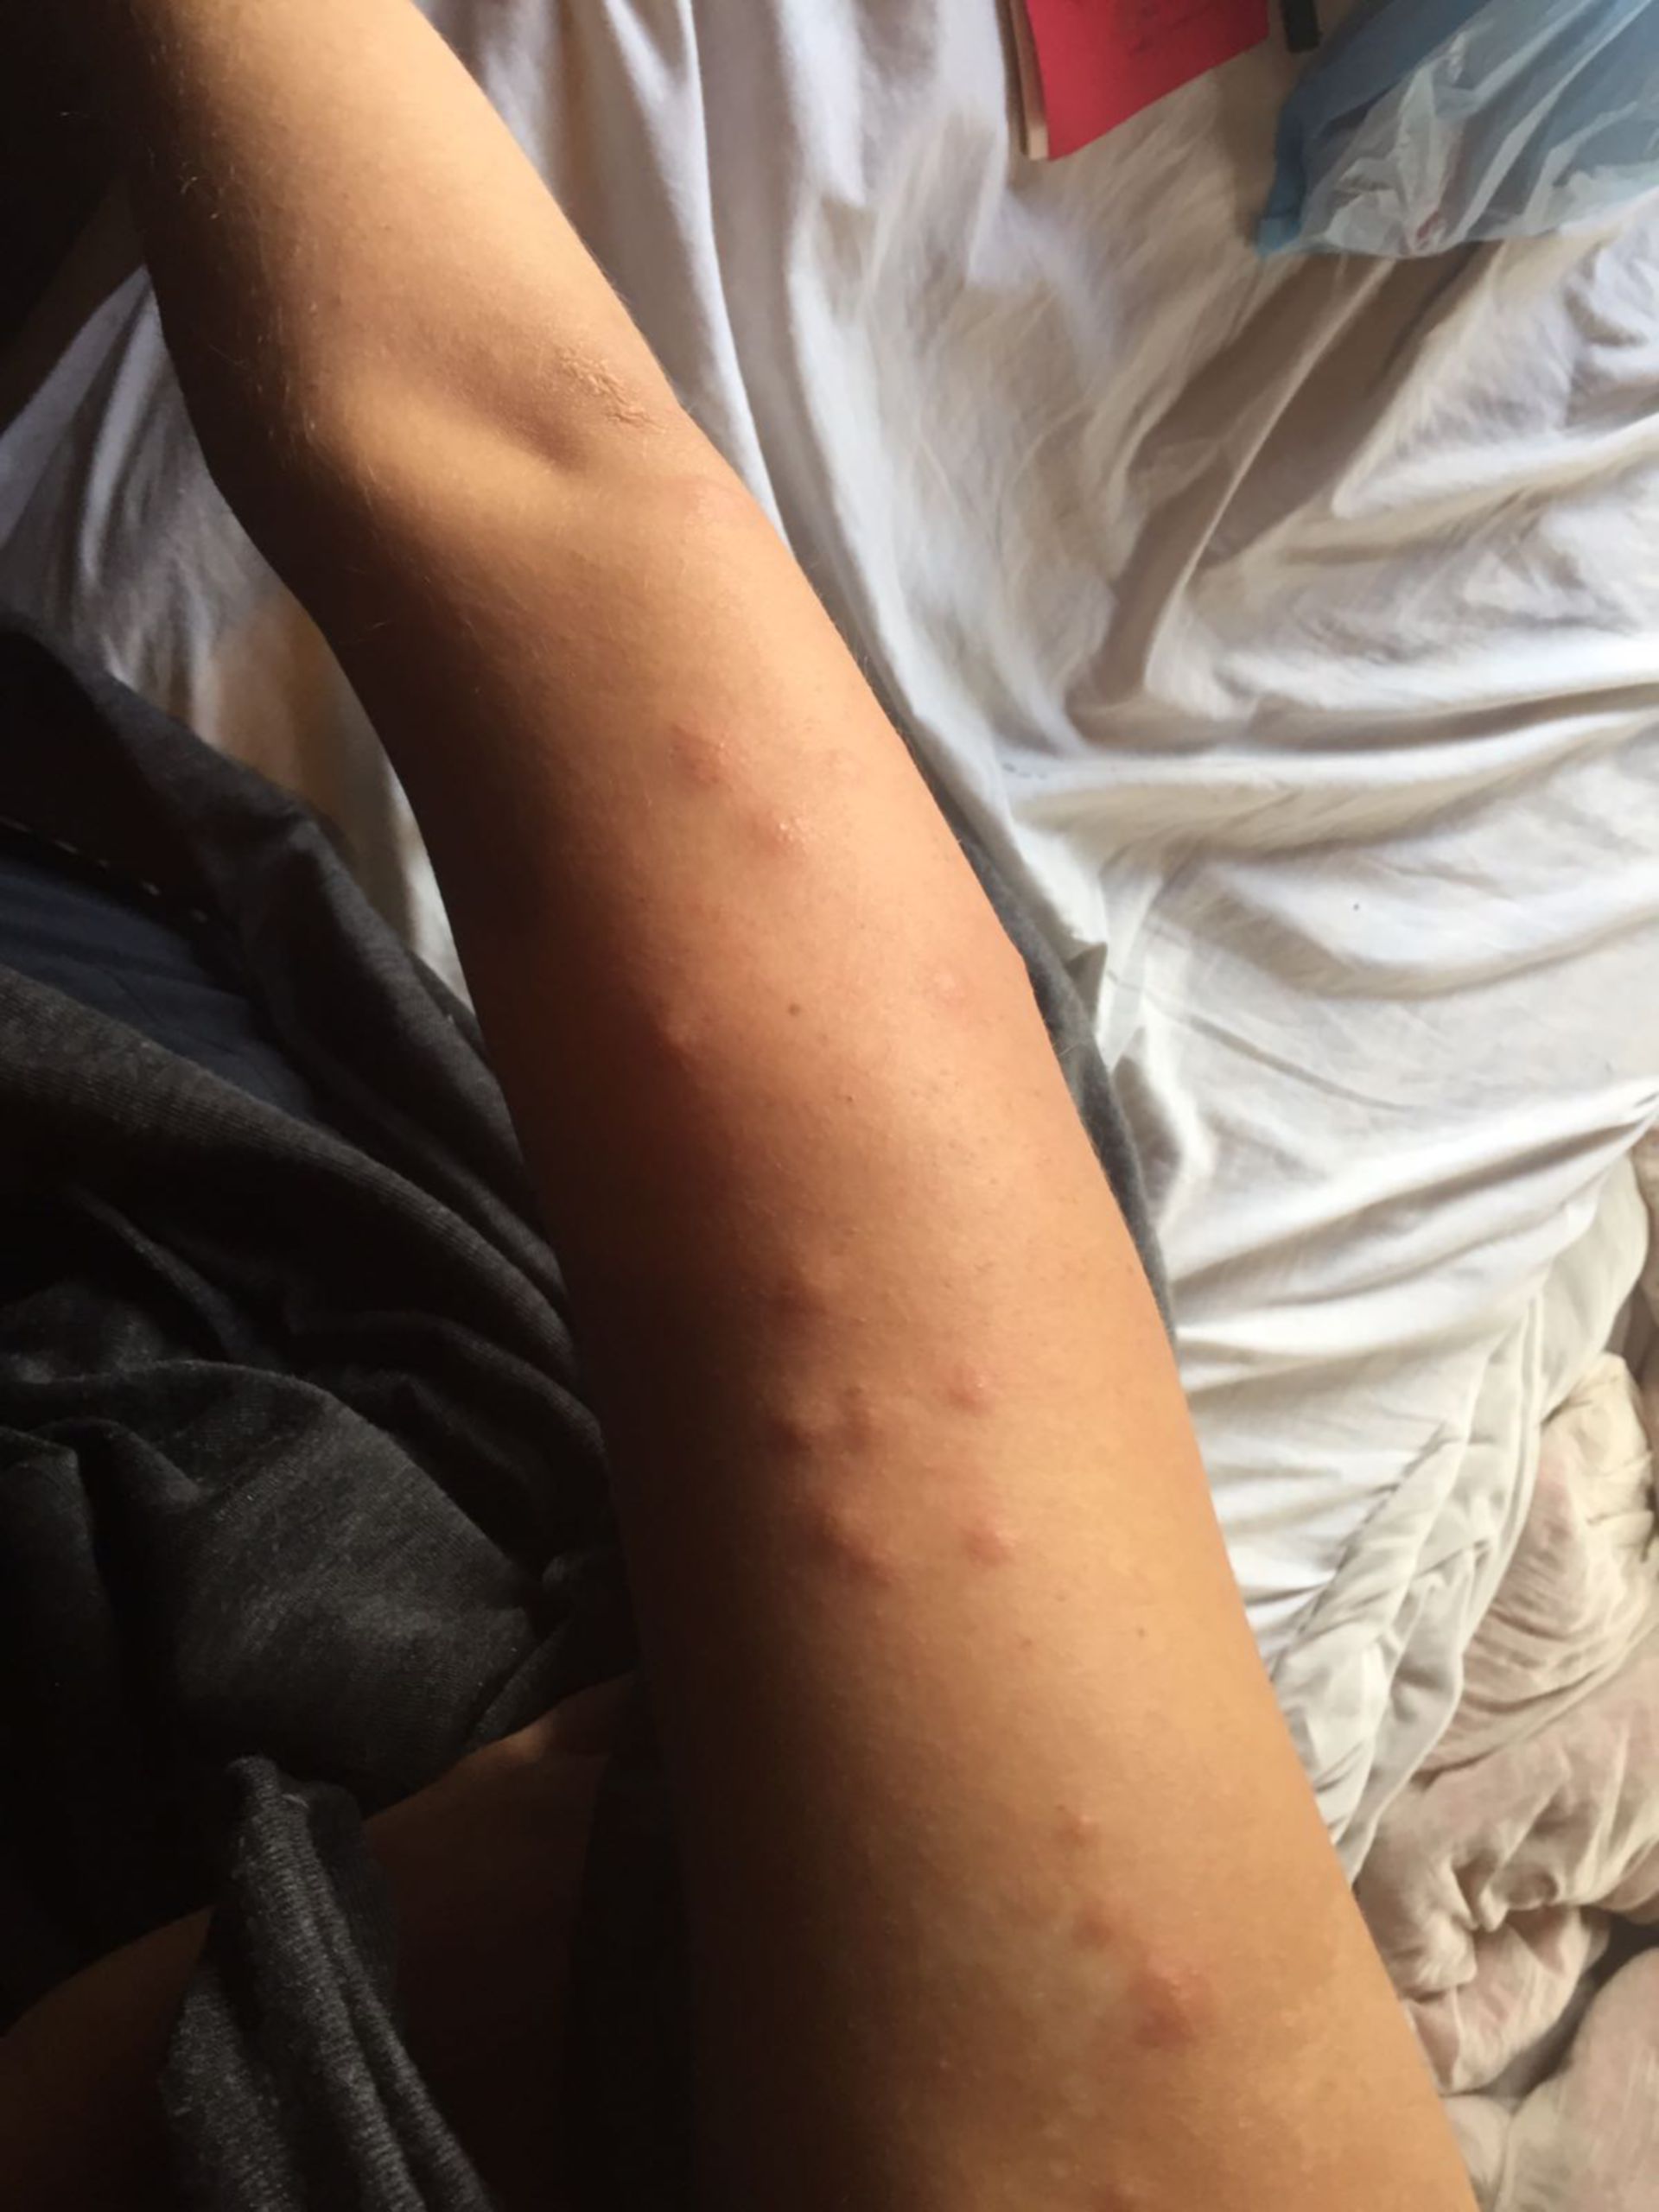 Arm with skin irritation